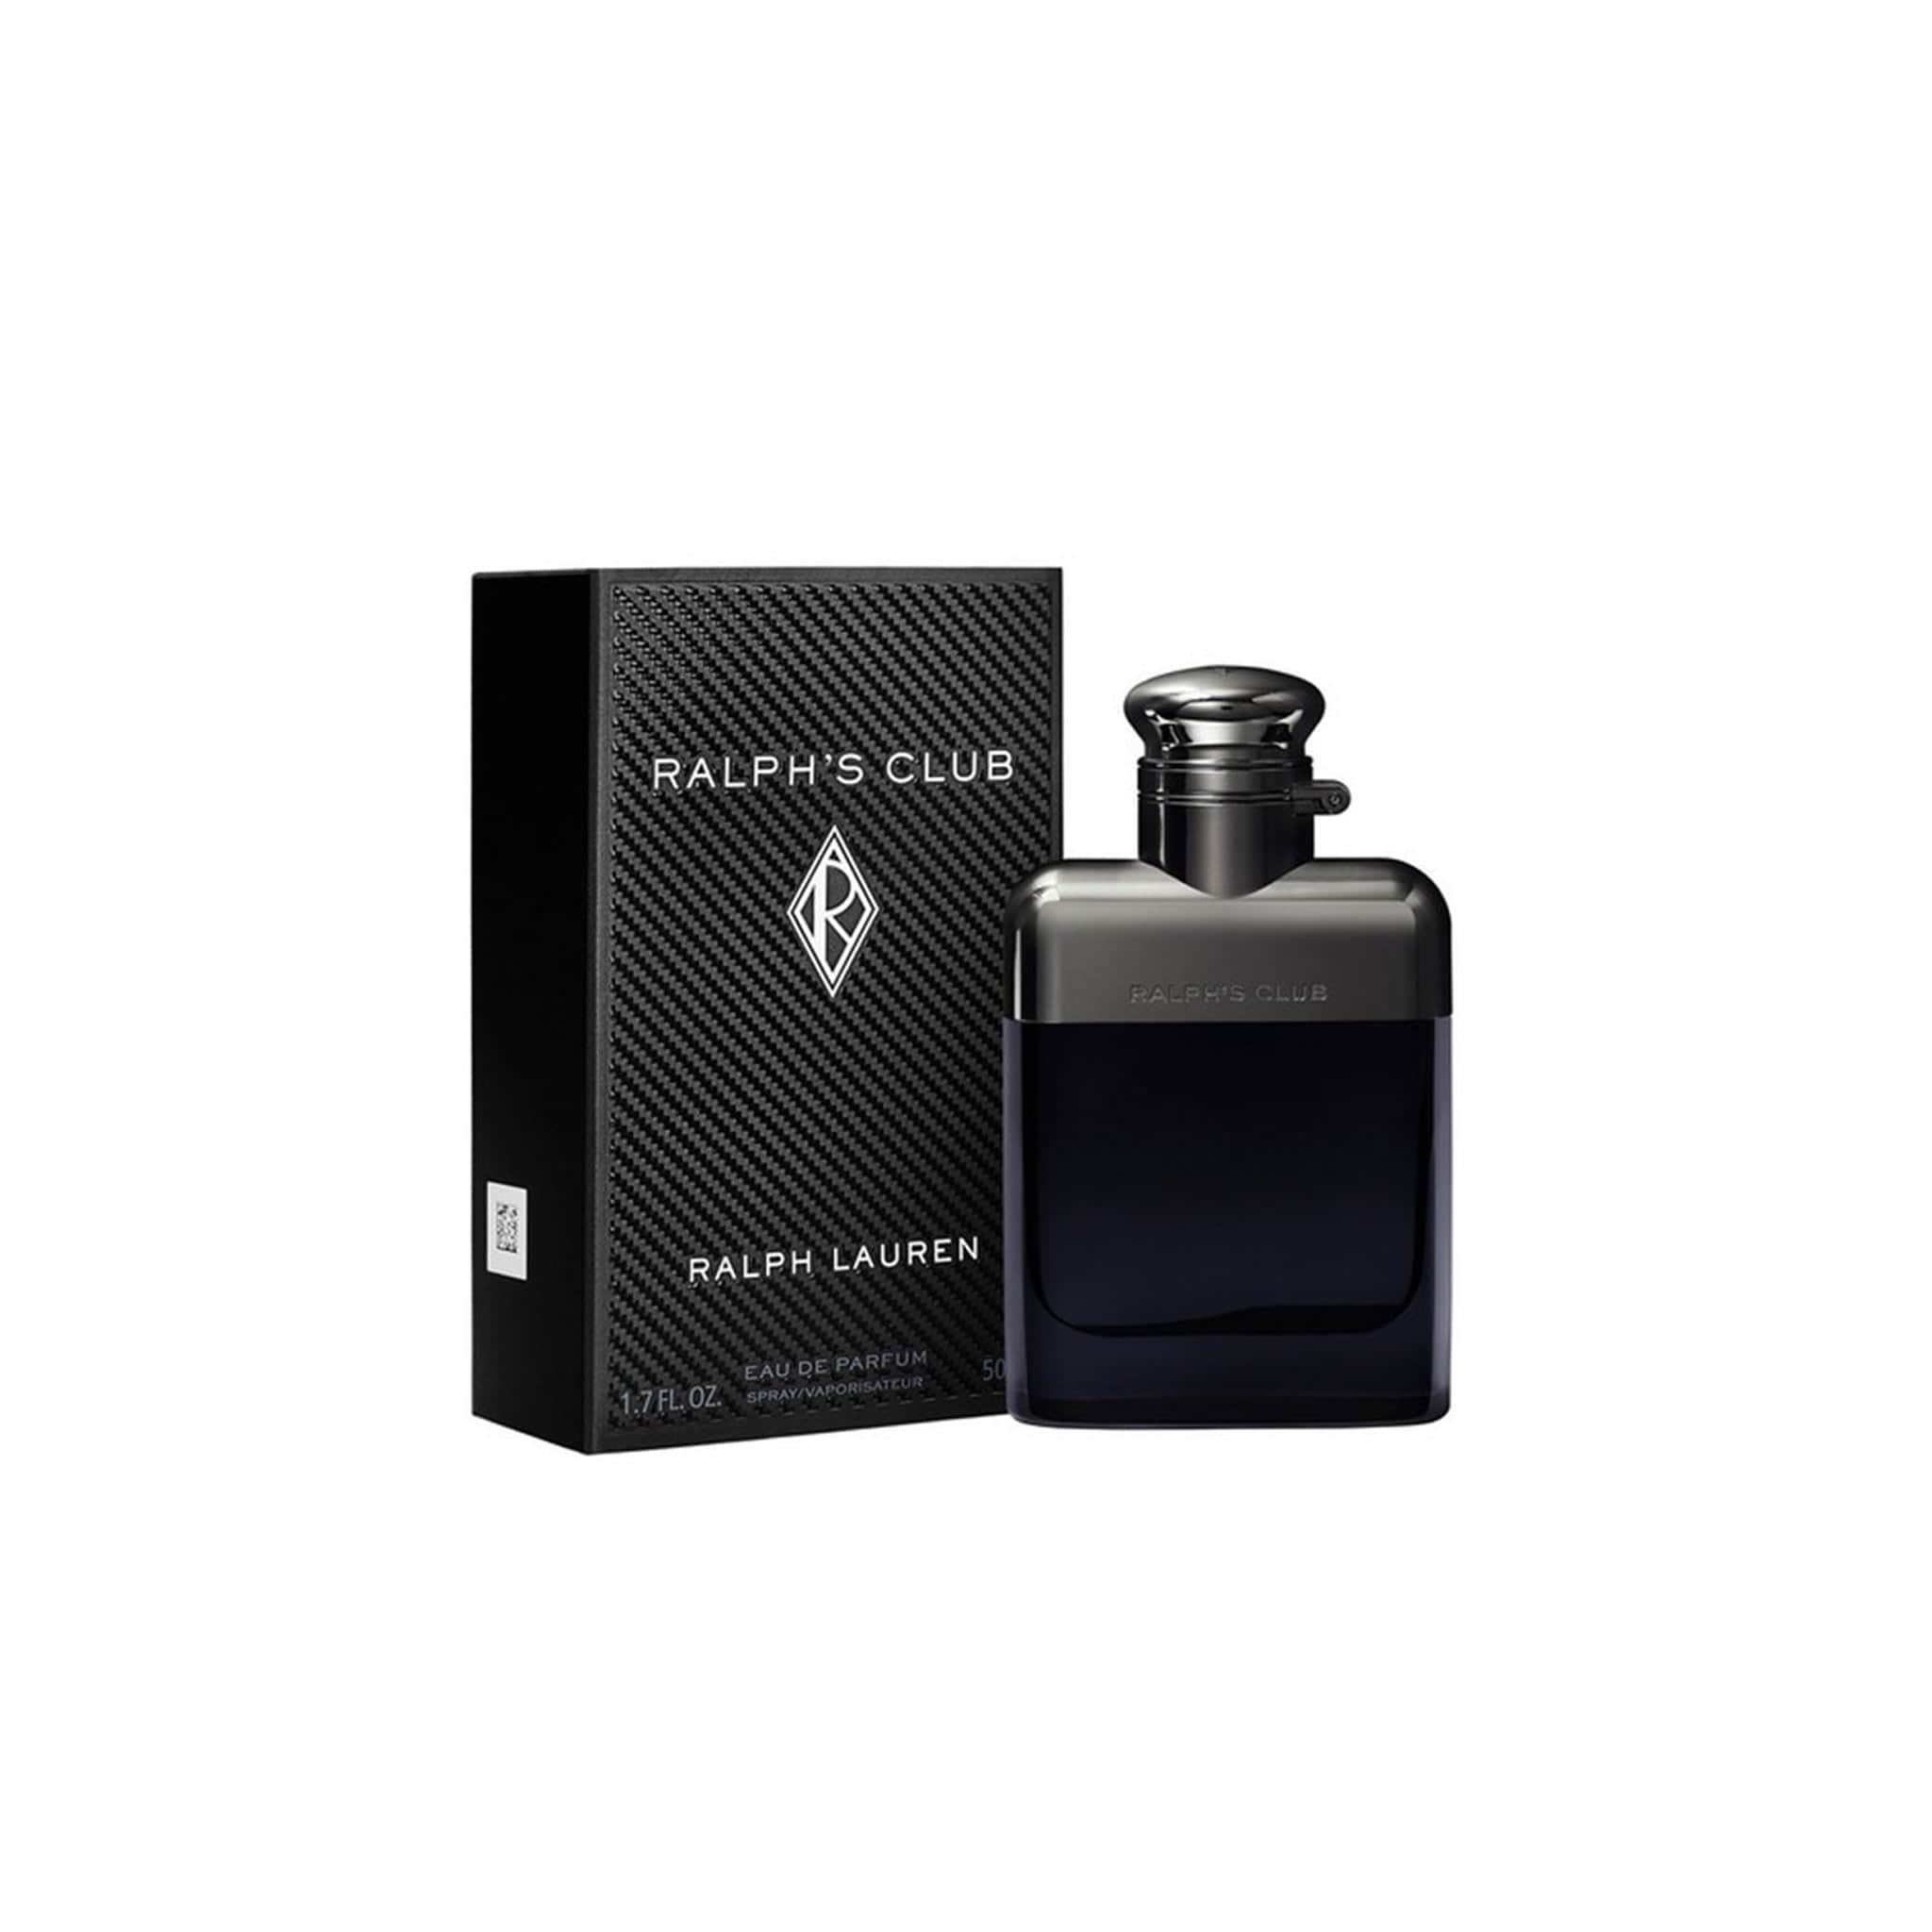 Ralph Lauren Ralph's Club Parfum | My Perfume Shop Australia